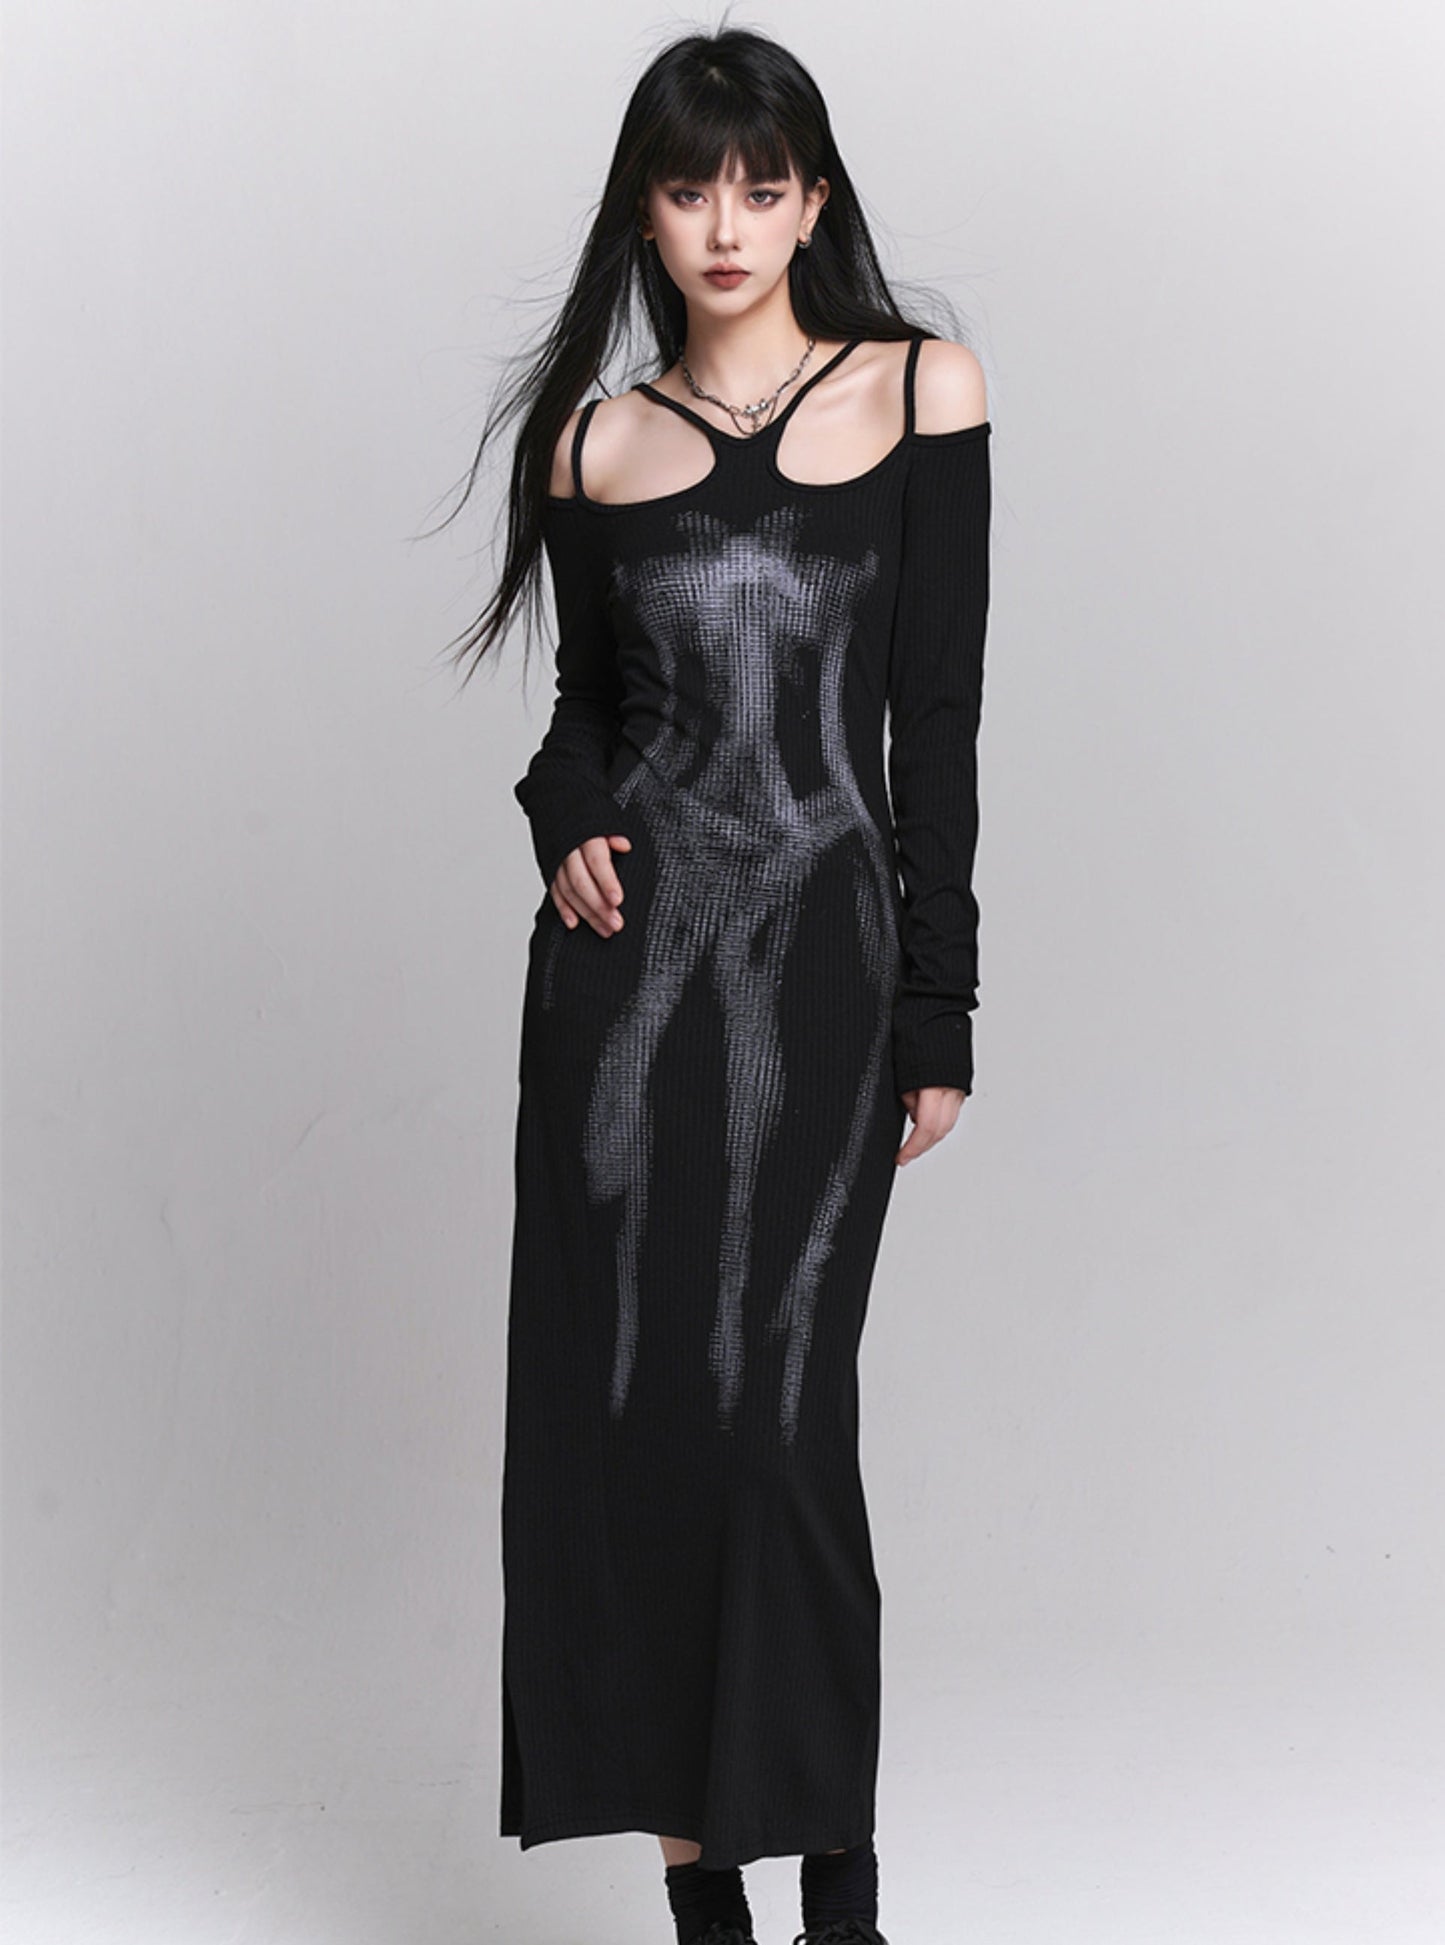 Black Artistic Spring Dress